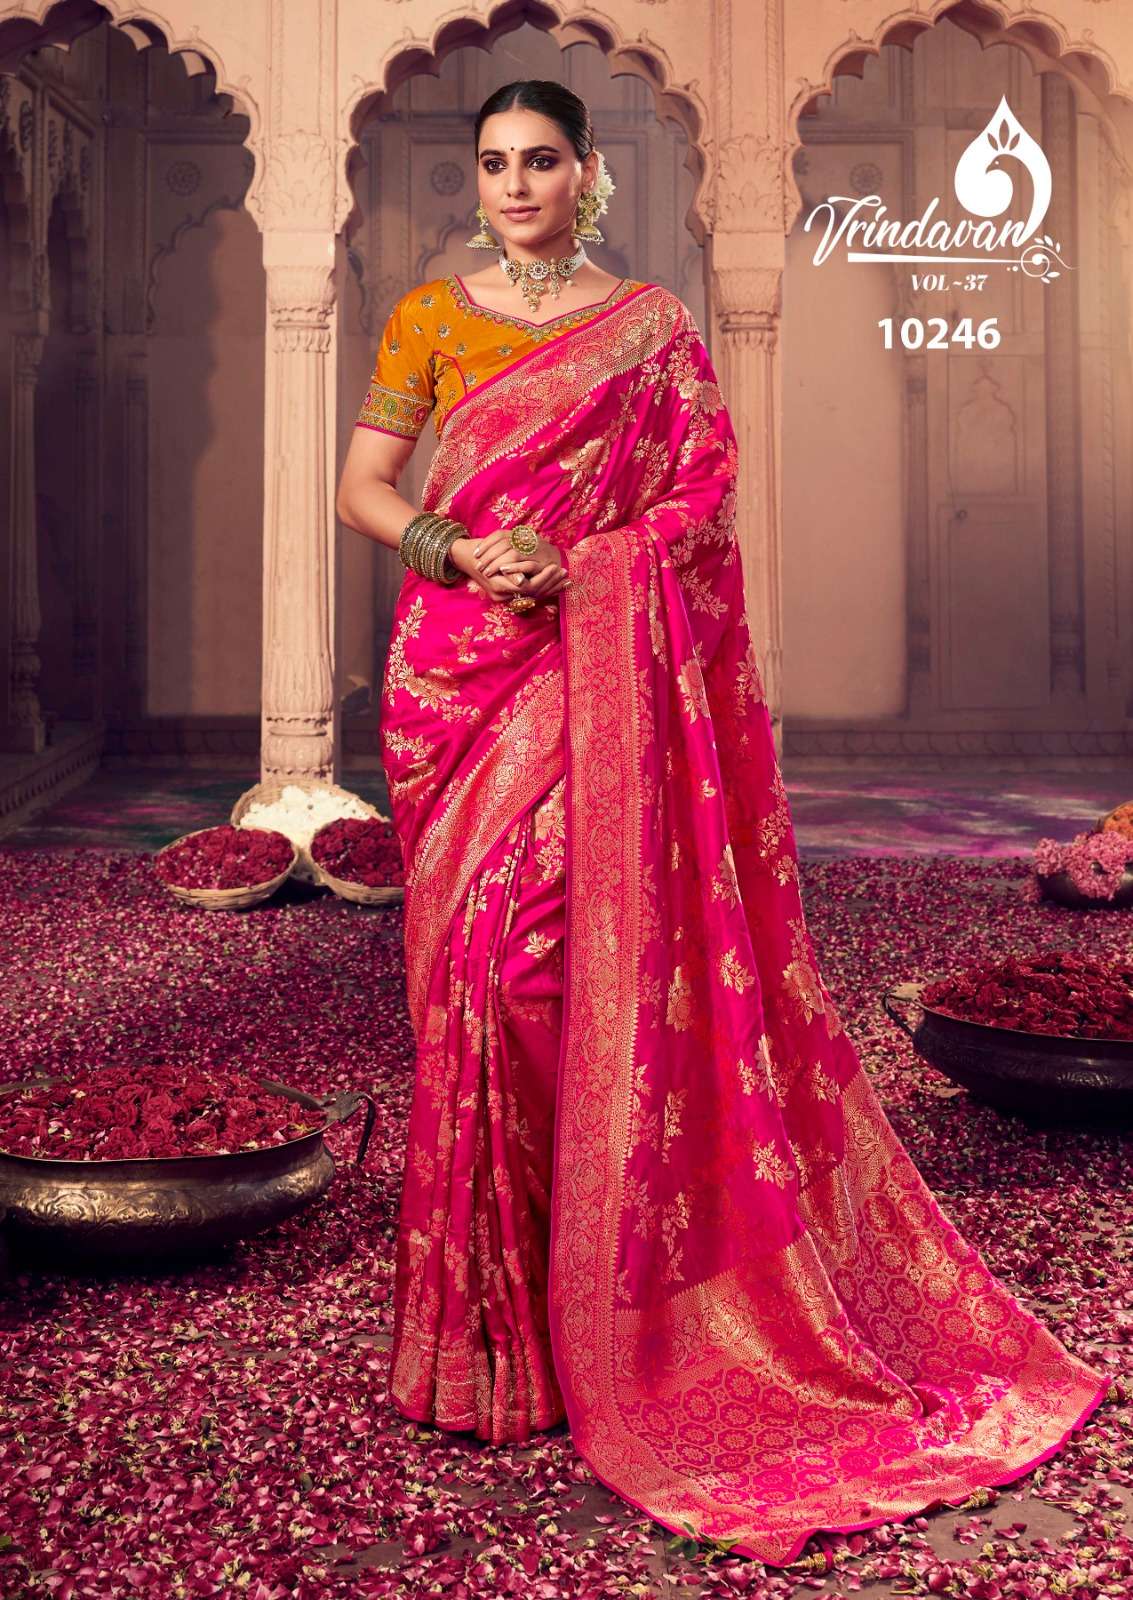 royal vrindavan vol 37 10240-10248 wedding wear dola silk saree with heavy work blouse peice supplier